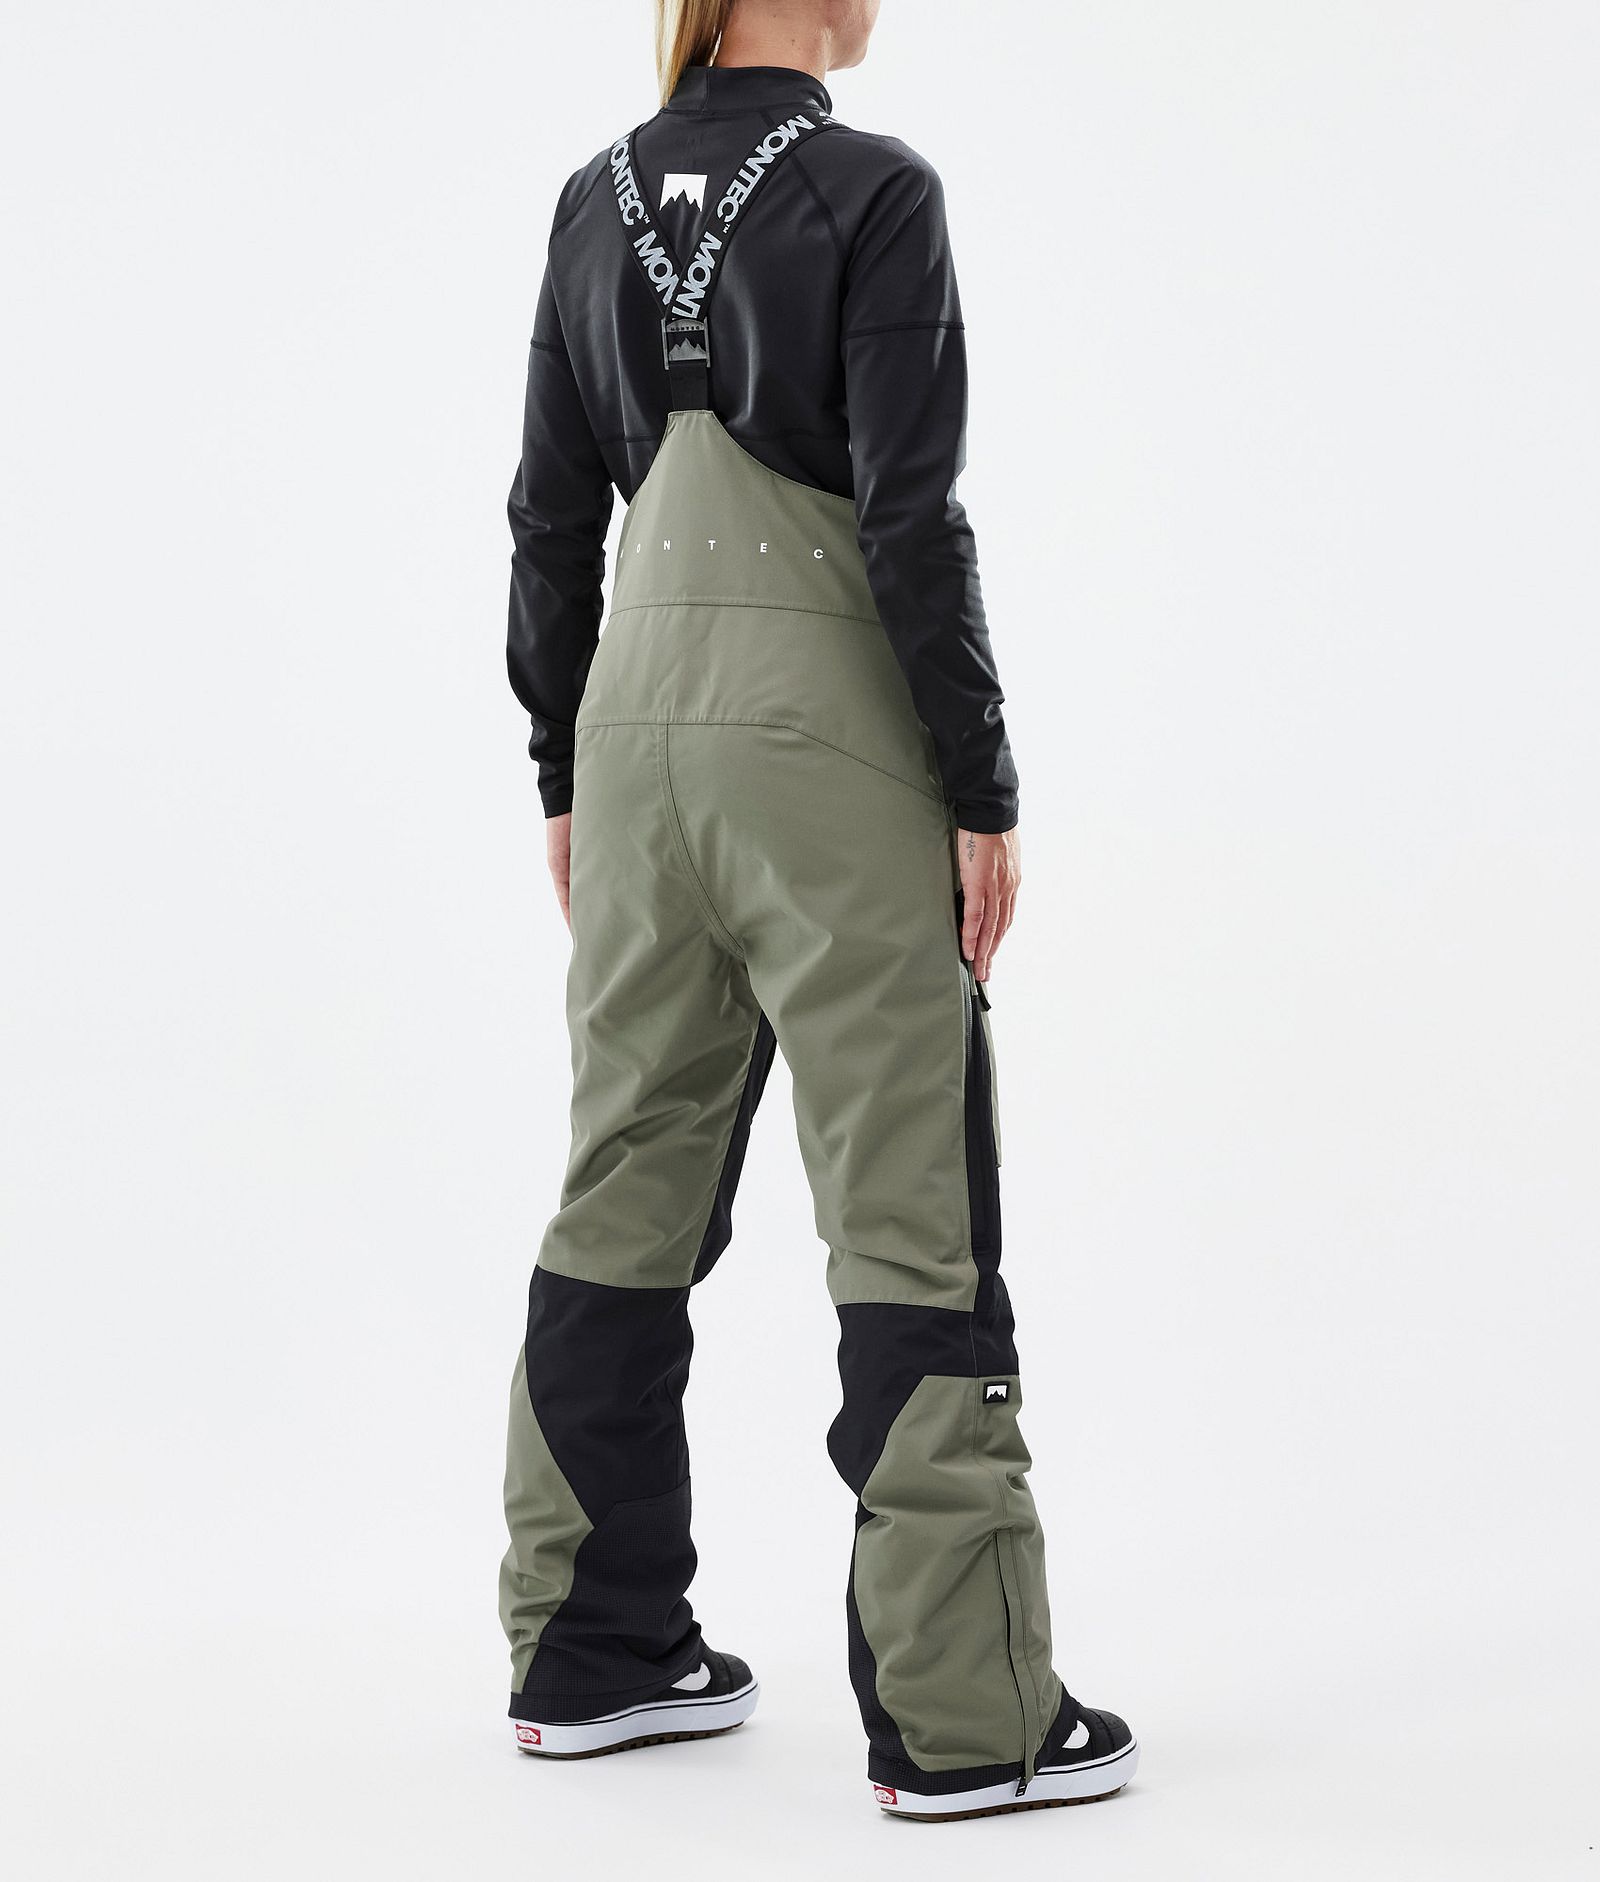 Fawk W Pantalon de Snowboard Femme Greenish/Black Renewed